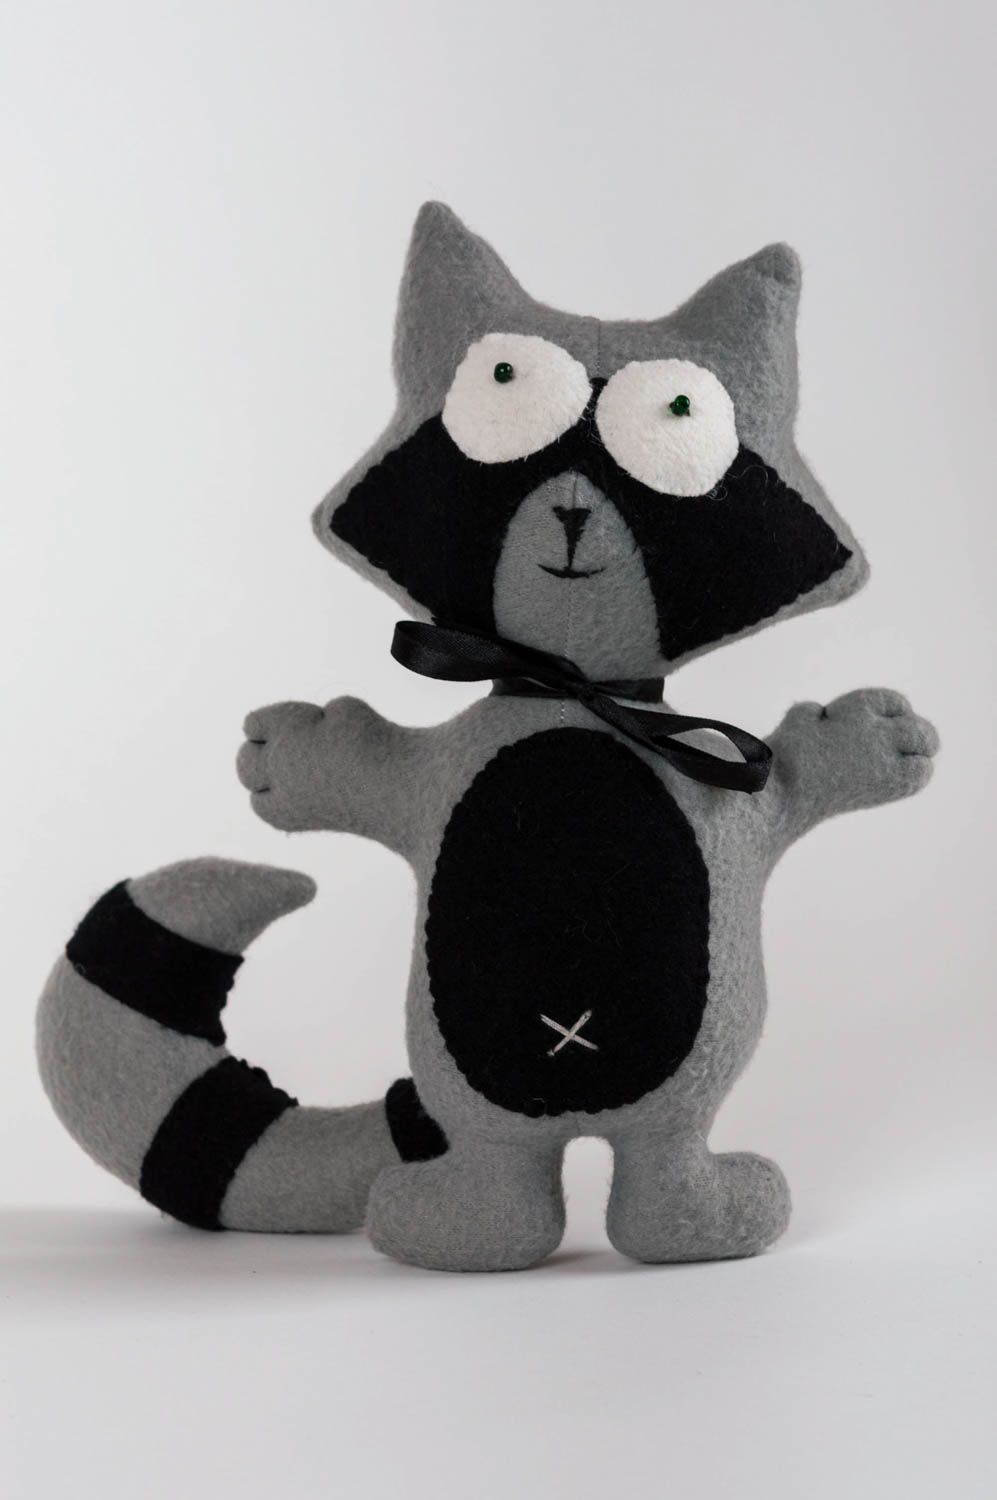 Handmade fabric soft toy stylish raccoon interior design and kids gift ideas photo 2